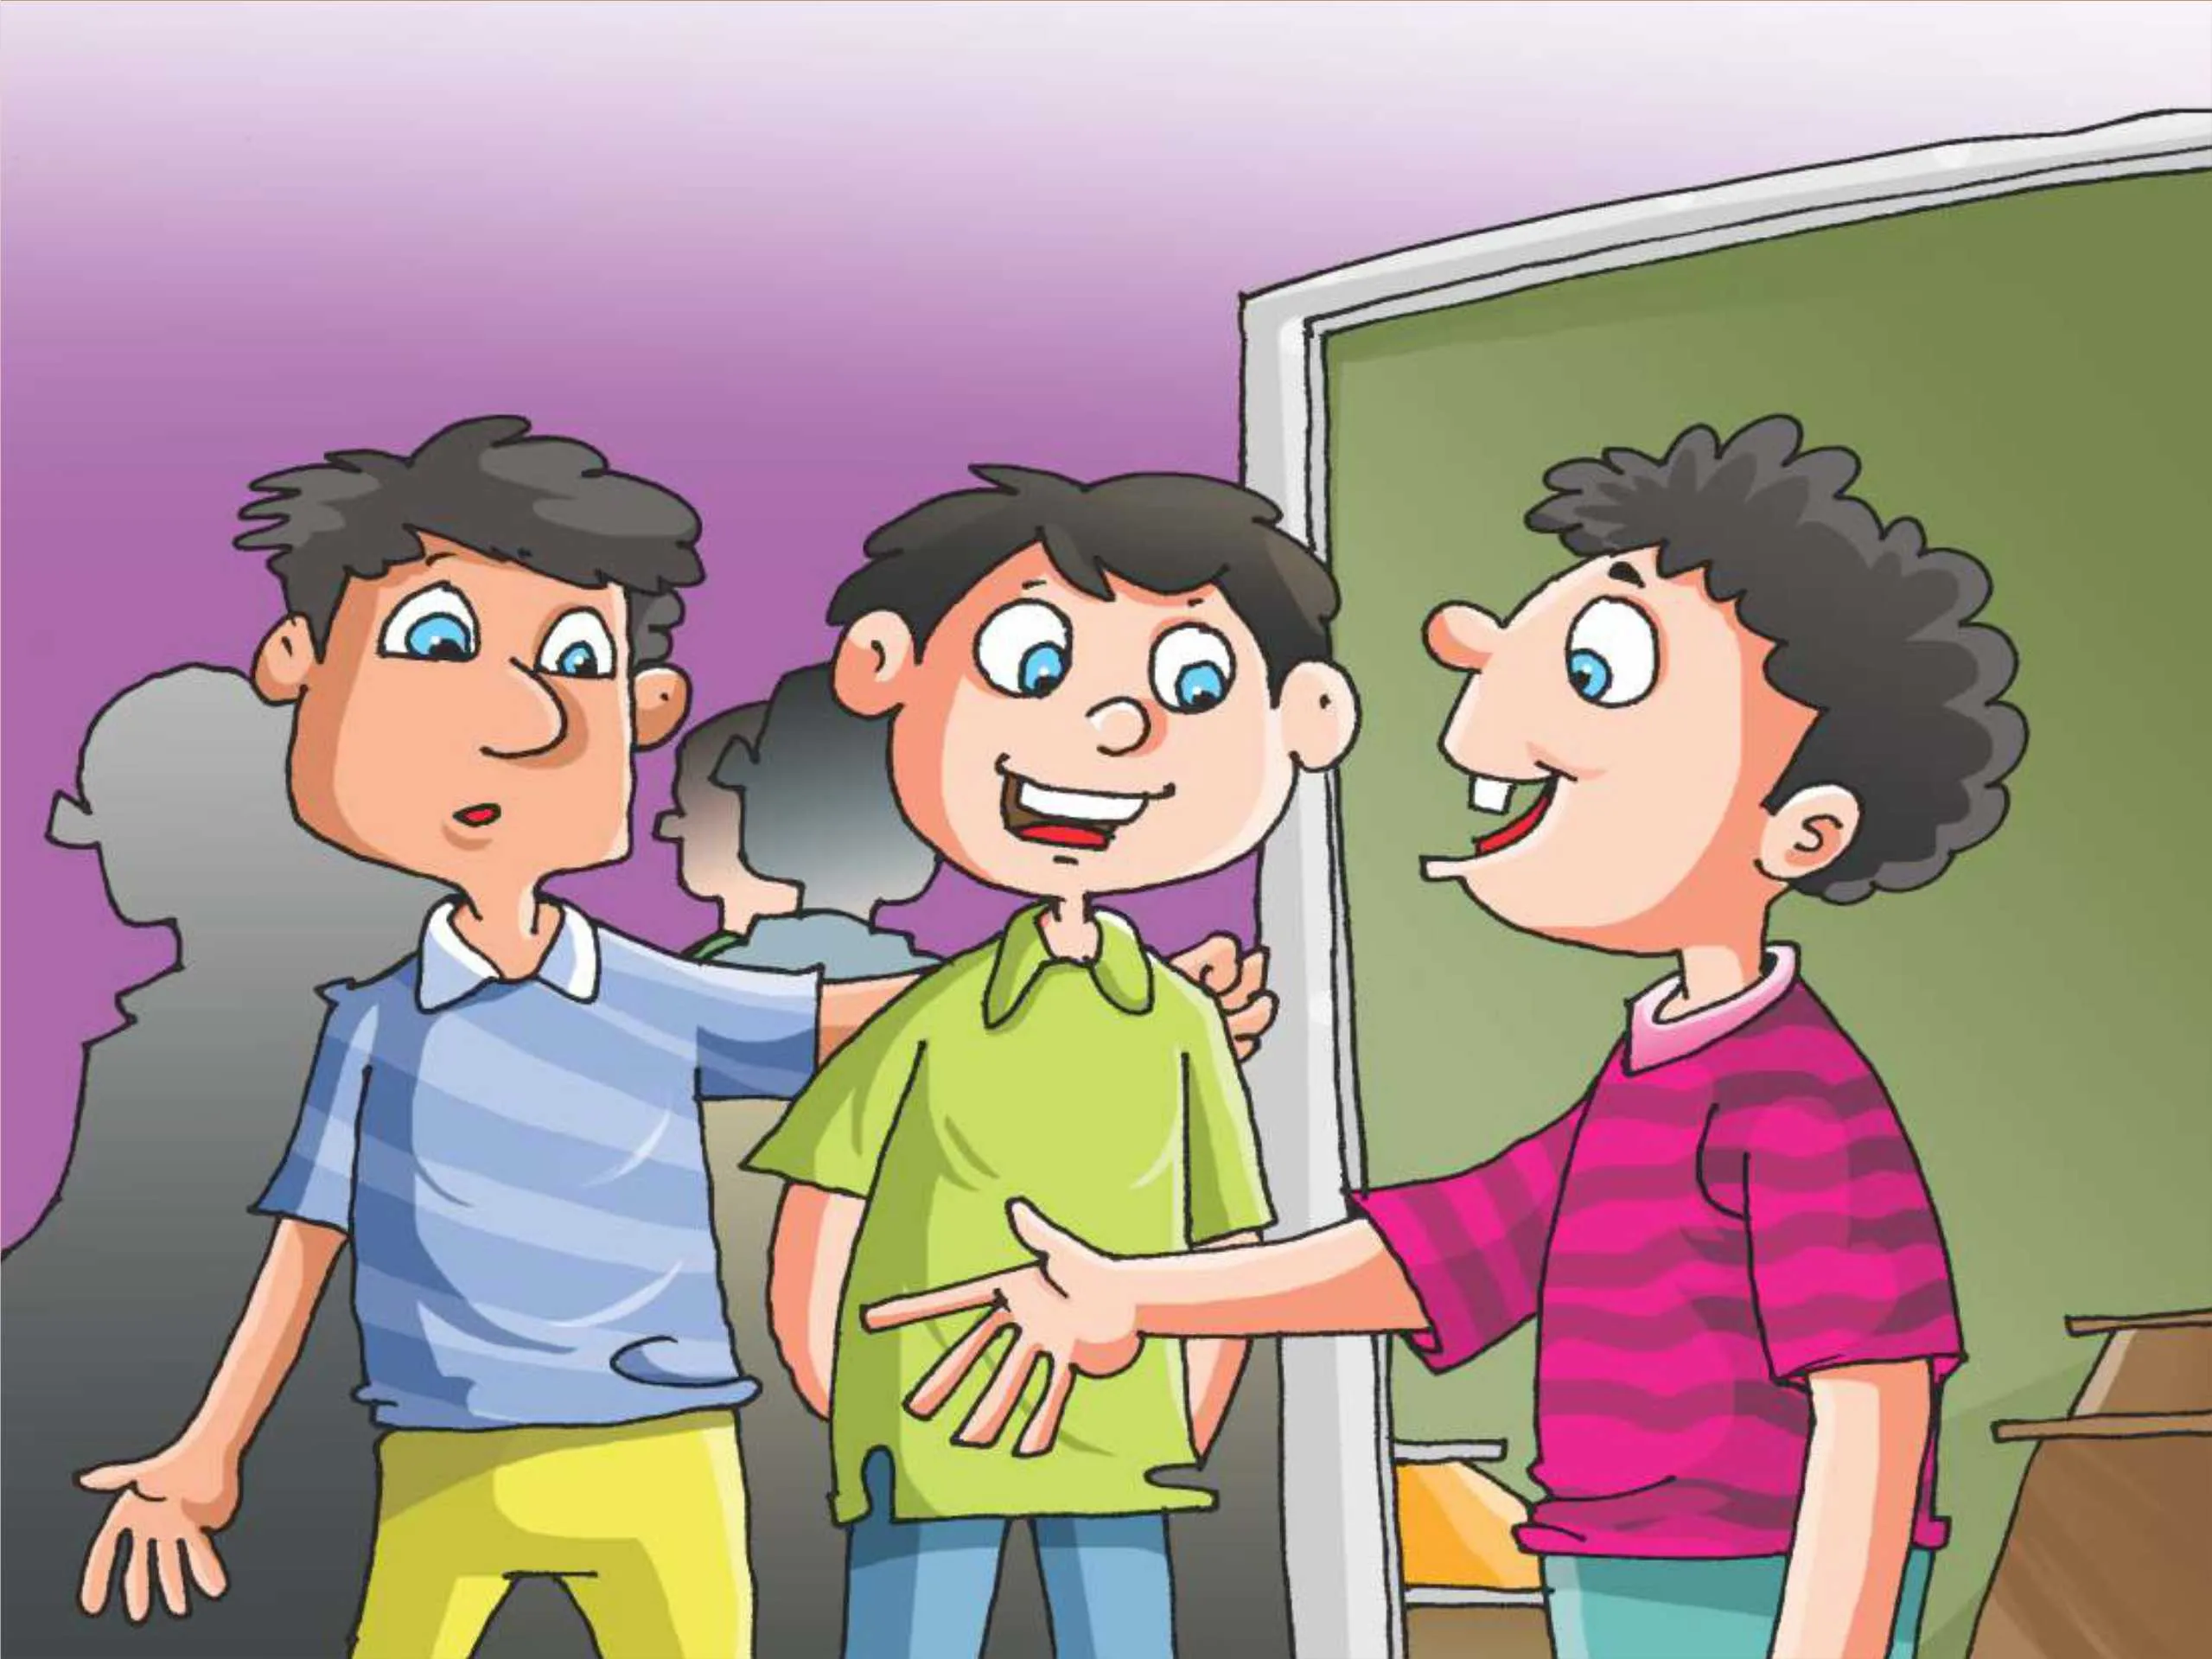 Three kids cartoon image